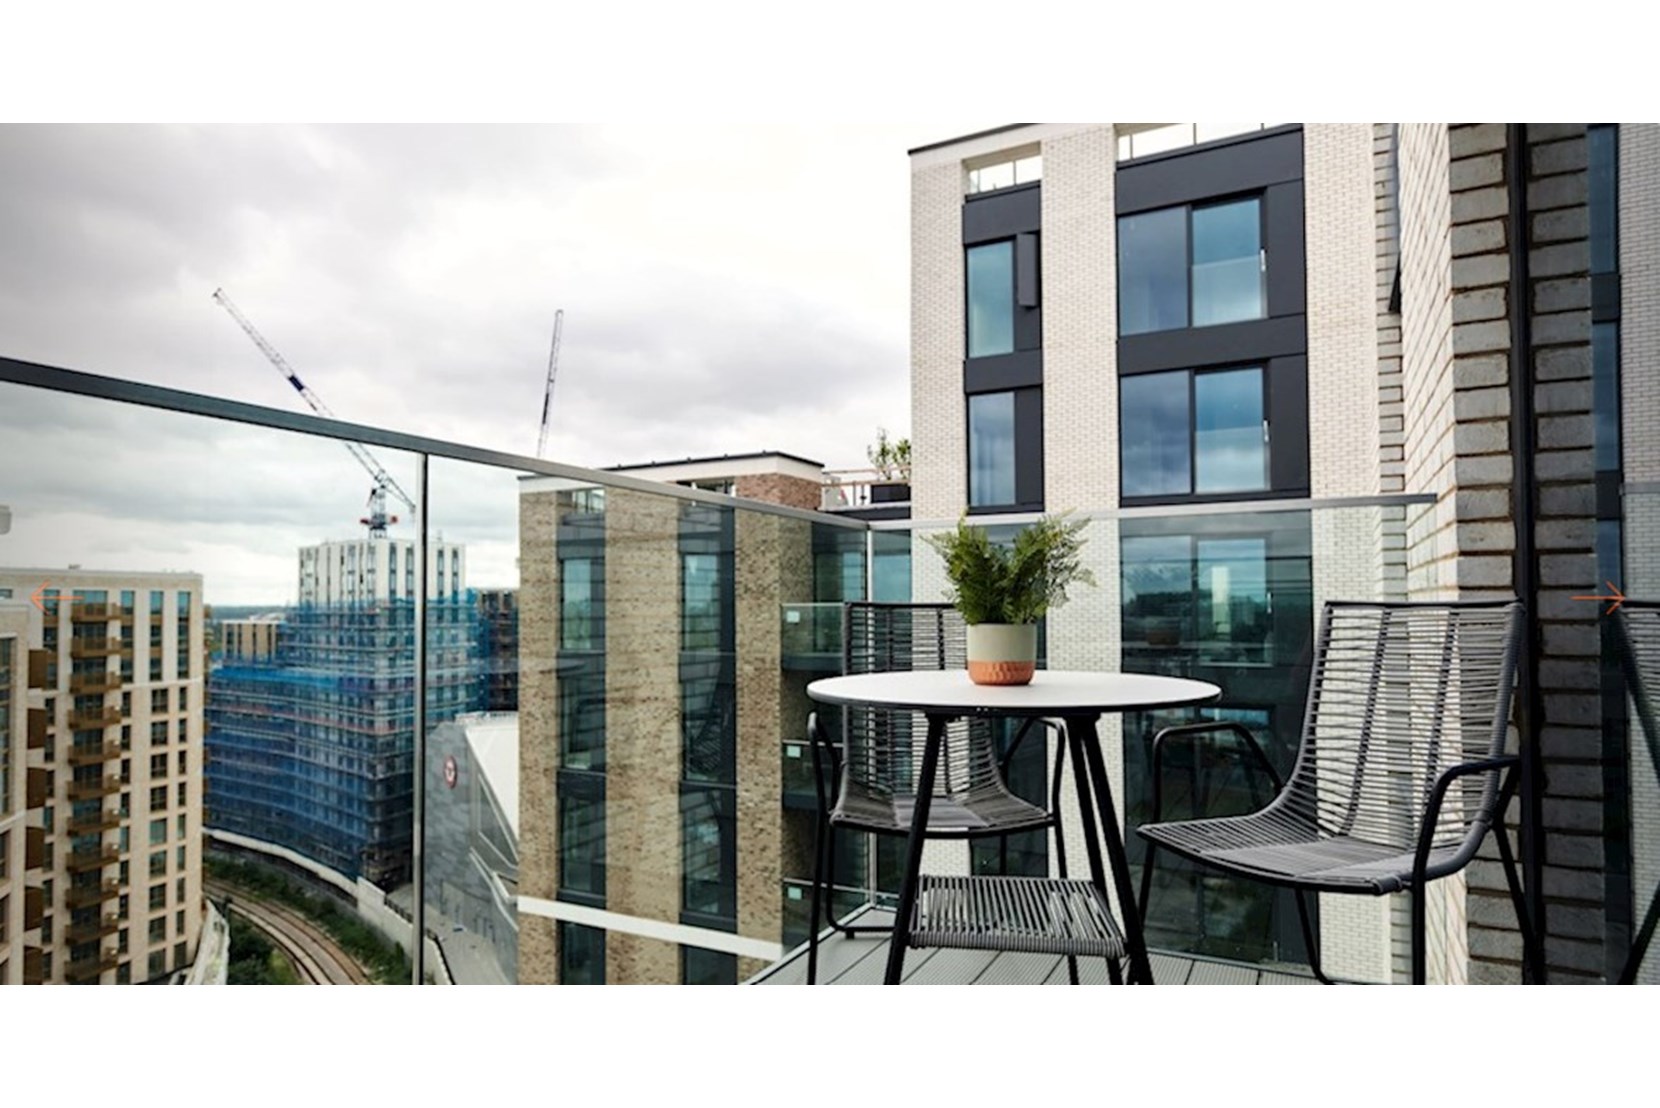 Apartment-APO-Group-Kew-Bridge-Hounslow-Greater-London-Balcony-1